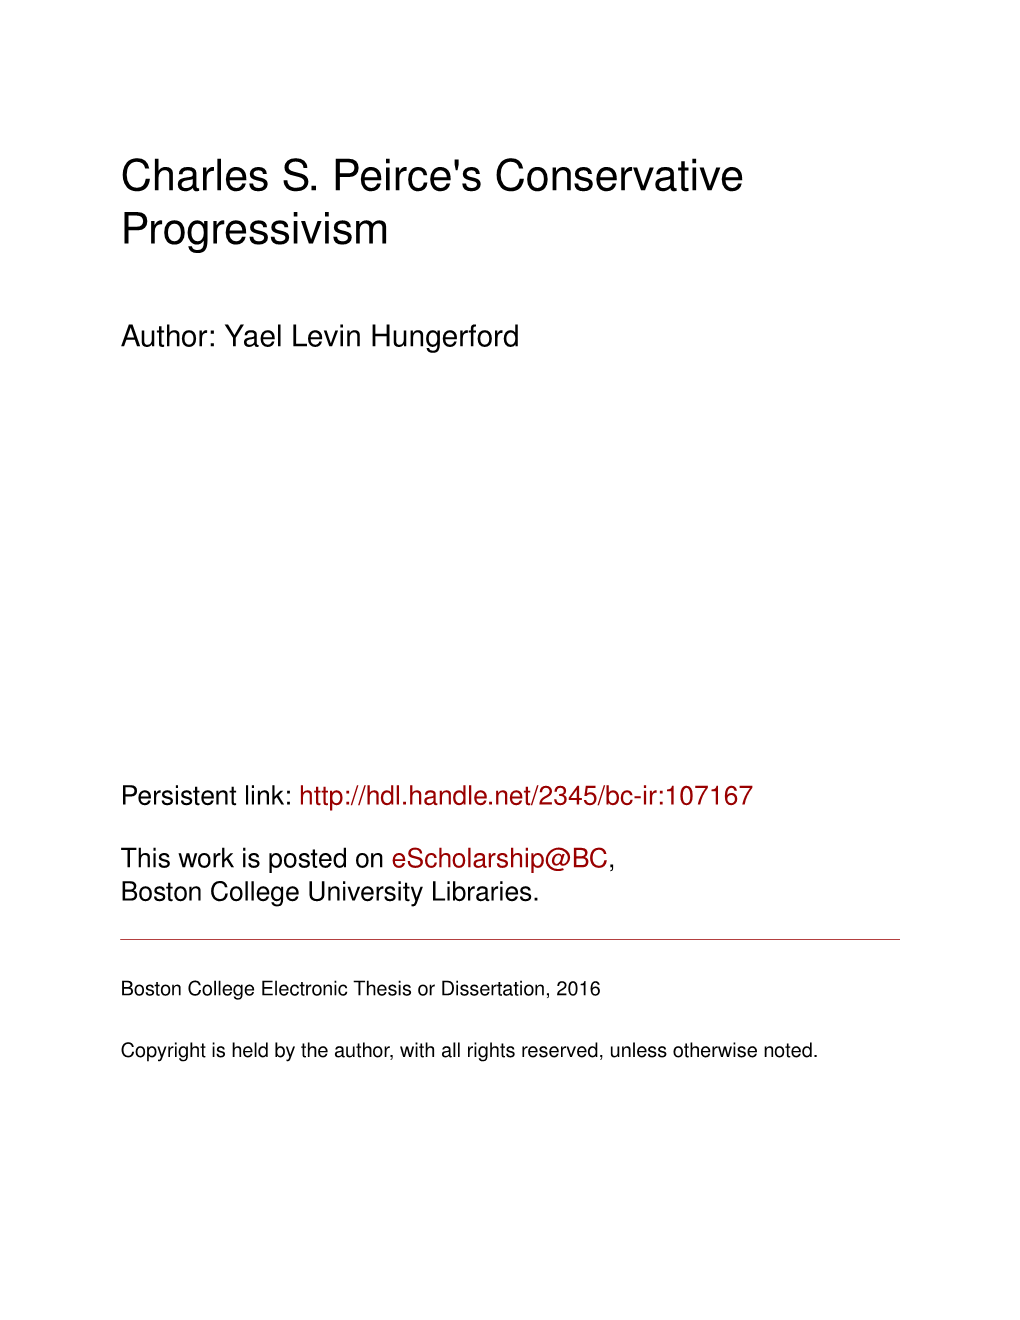 Charles S. Peirce's Conservative Progressivism